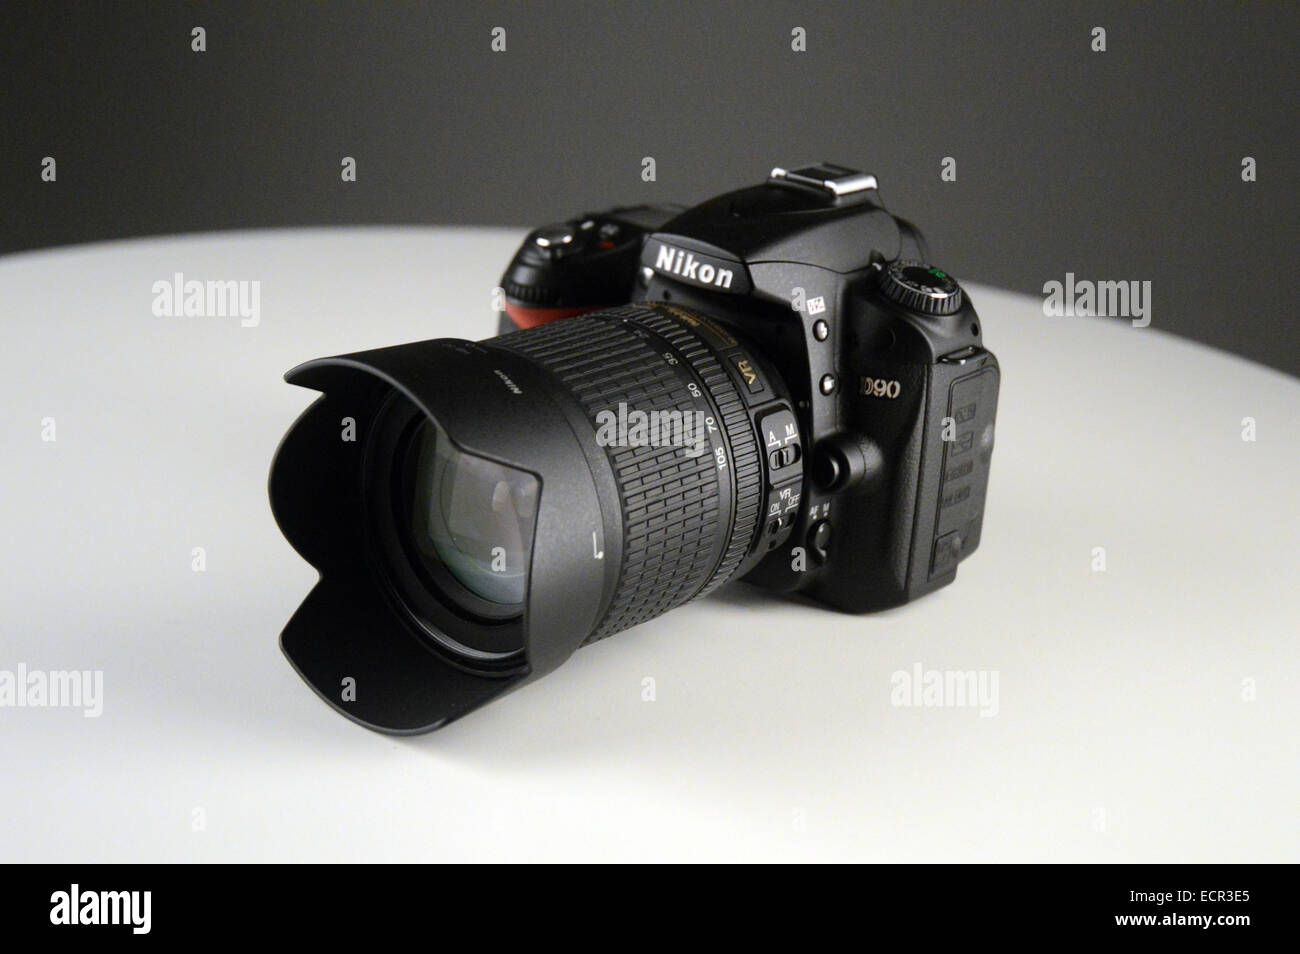 Cameras Nikon D90 Stock Photo